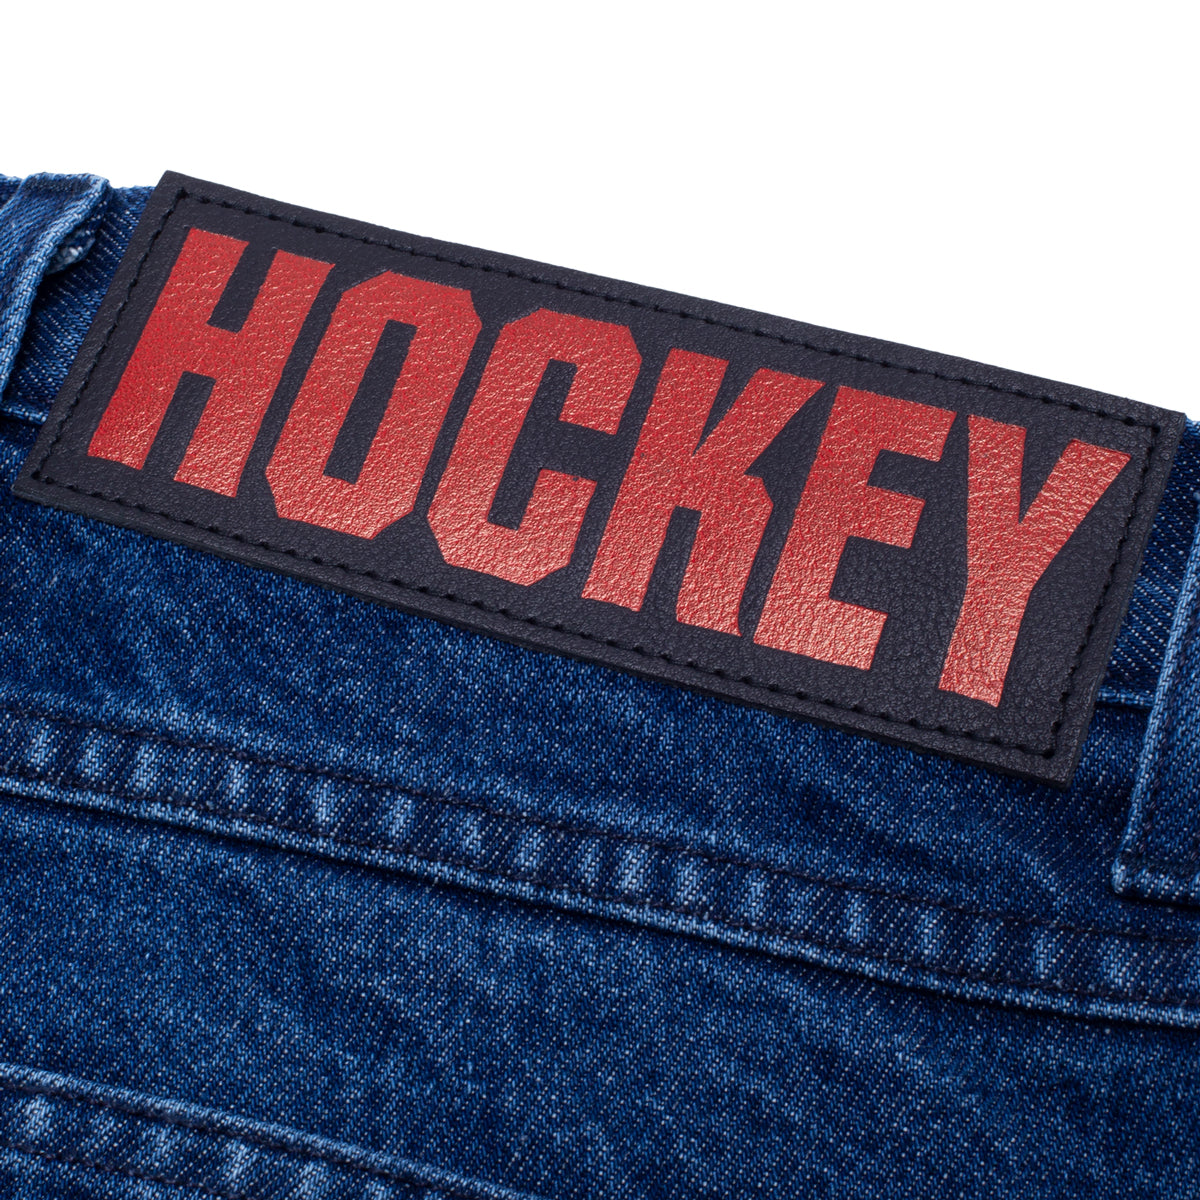 Hockey Double Knee Jeans - Indigo image 5